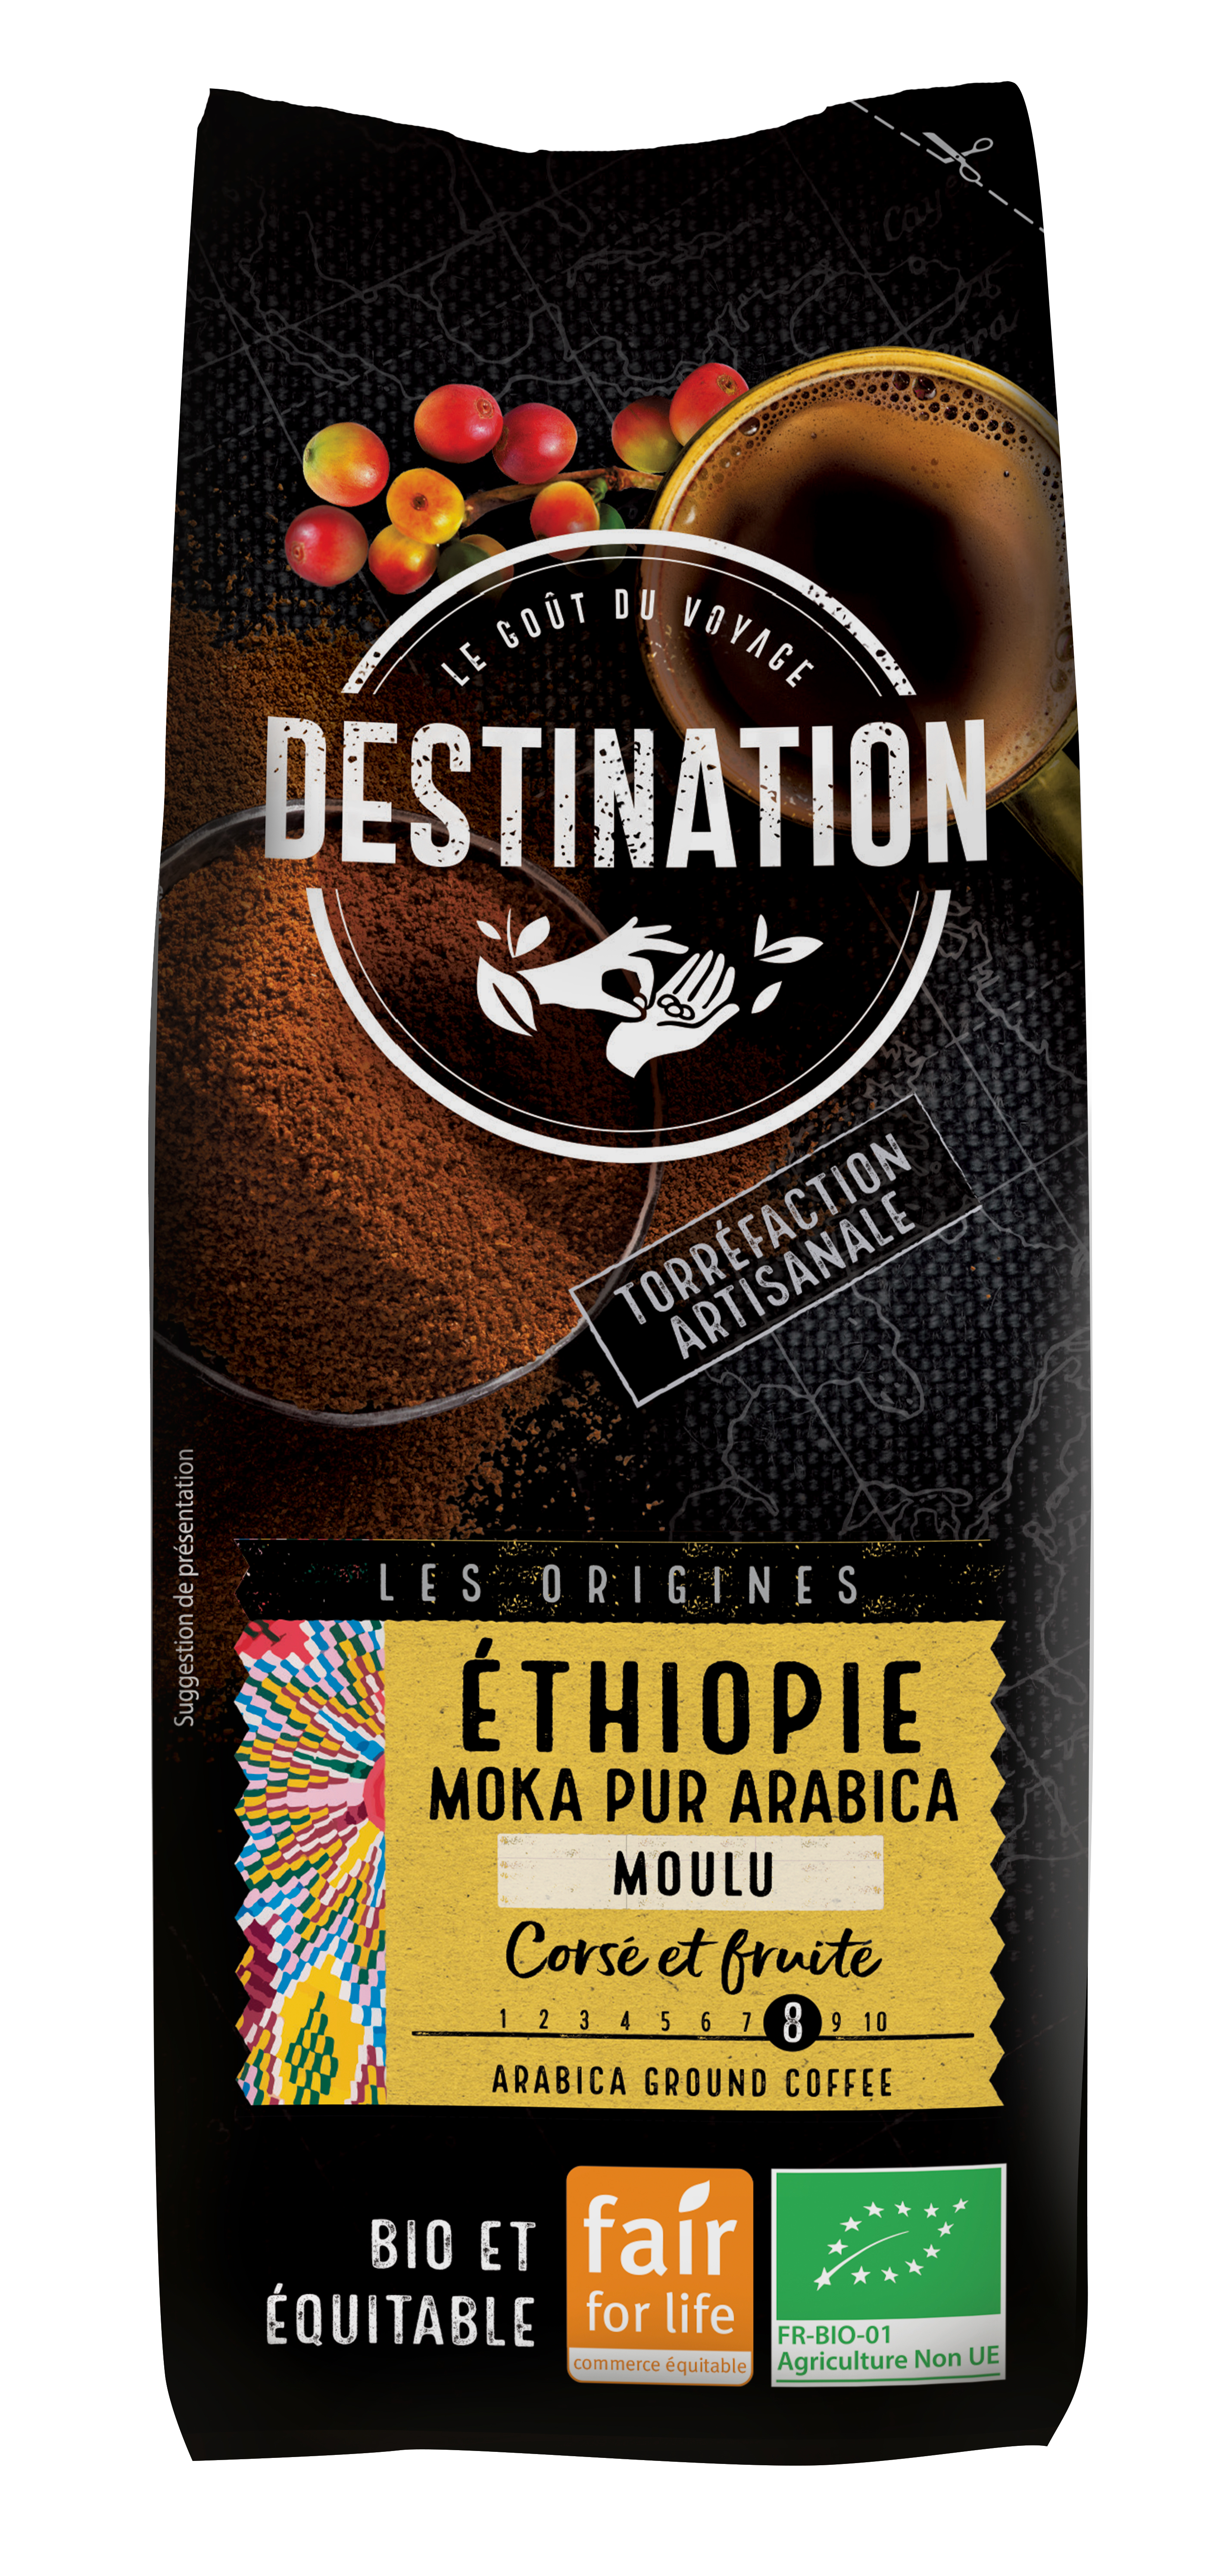 CAFÉ ETHIOPIE EQUITABLE MOKA PUR ARABICA MOULU (250G) DESTINATION 